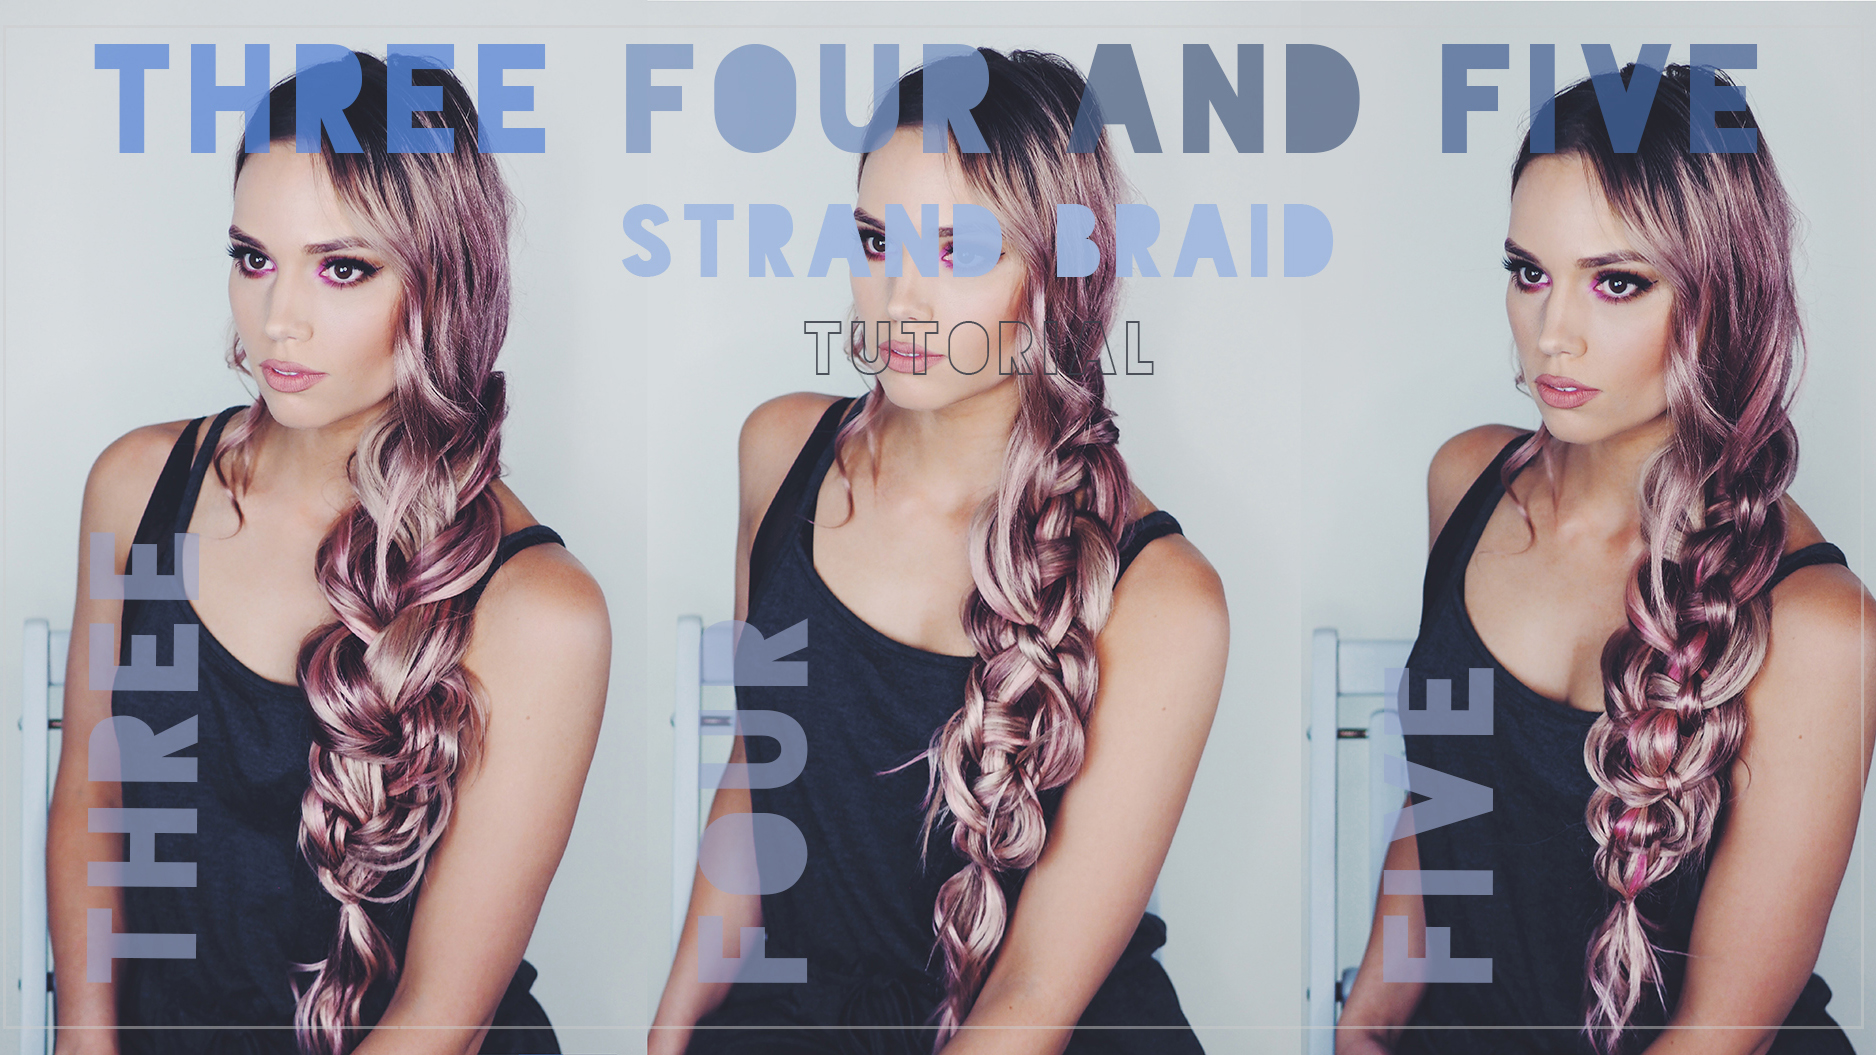 Three four and five strand braids tutorial